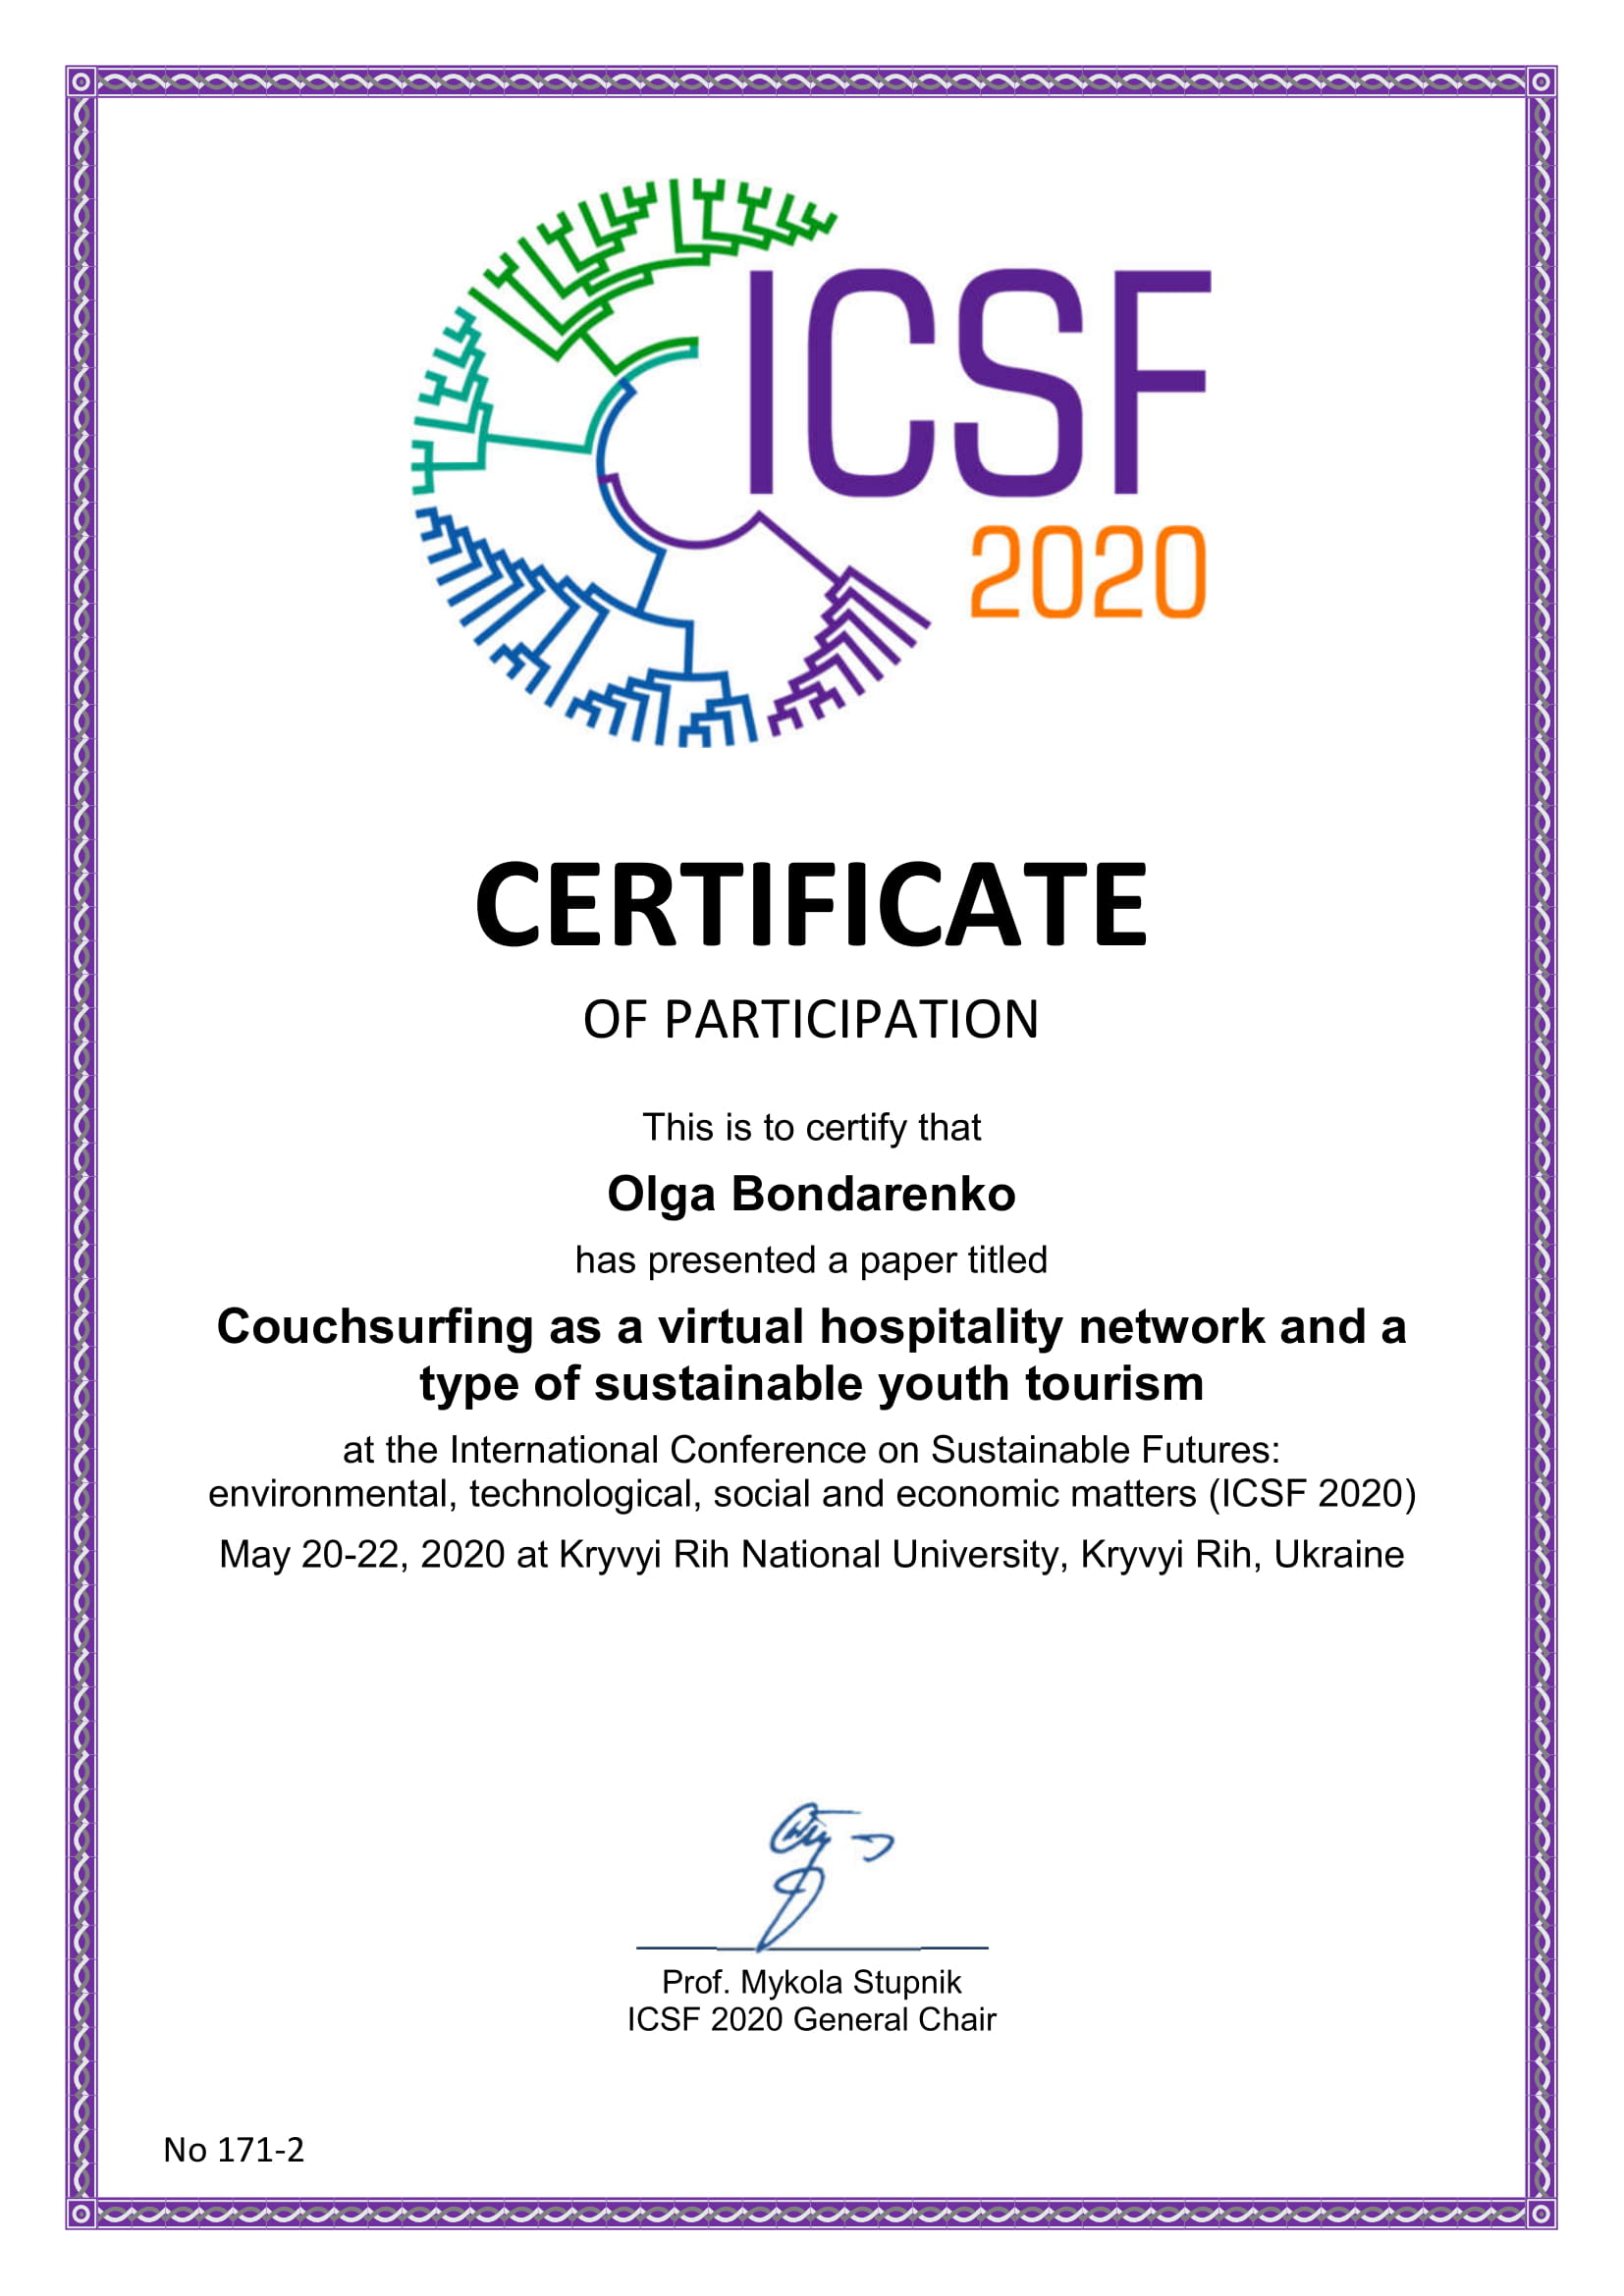 ICSF2020 certificate 411 1